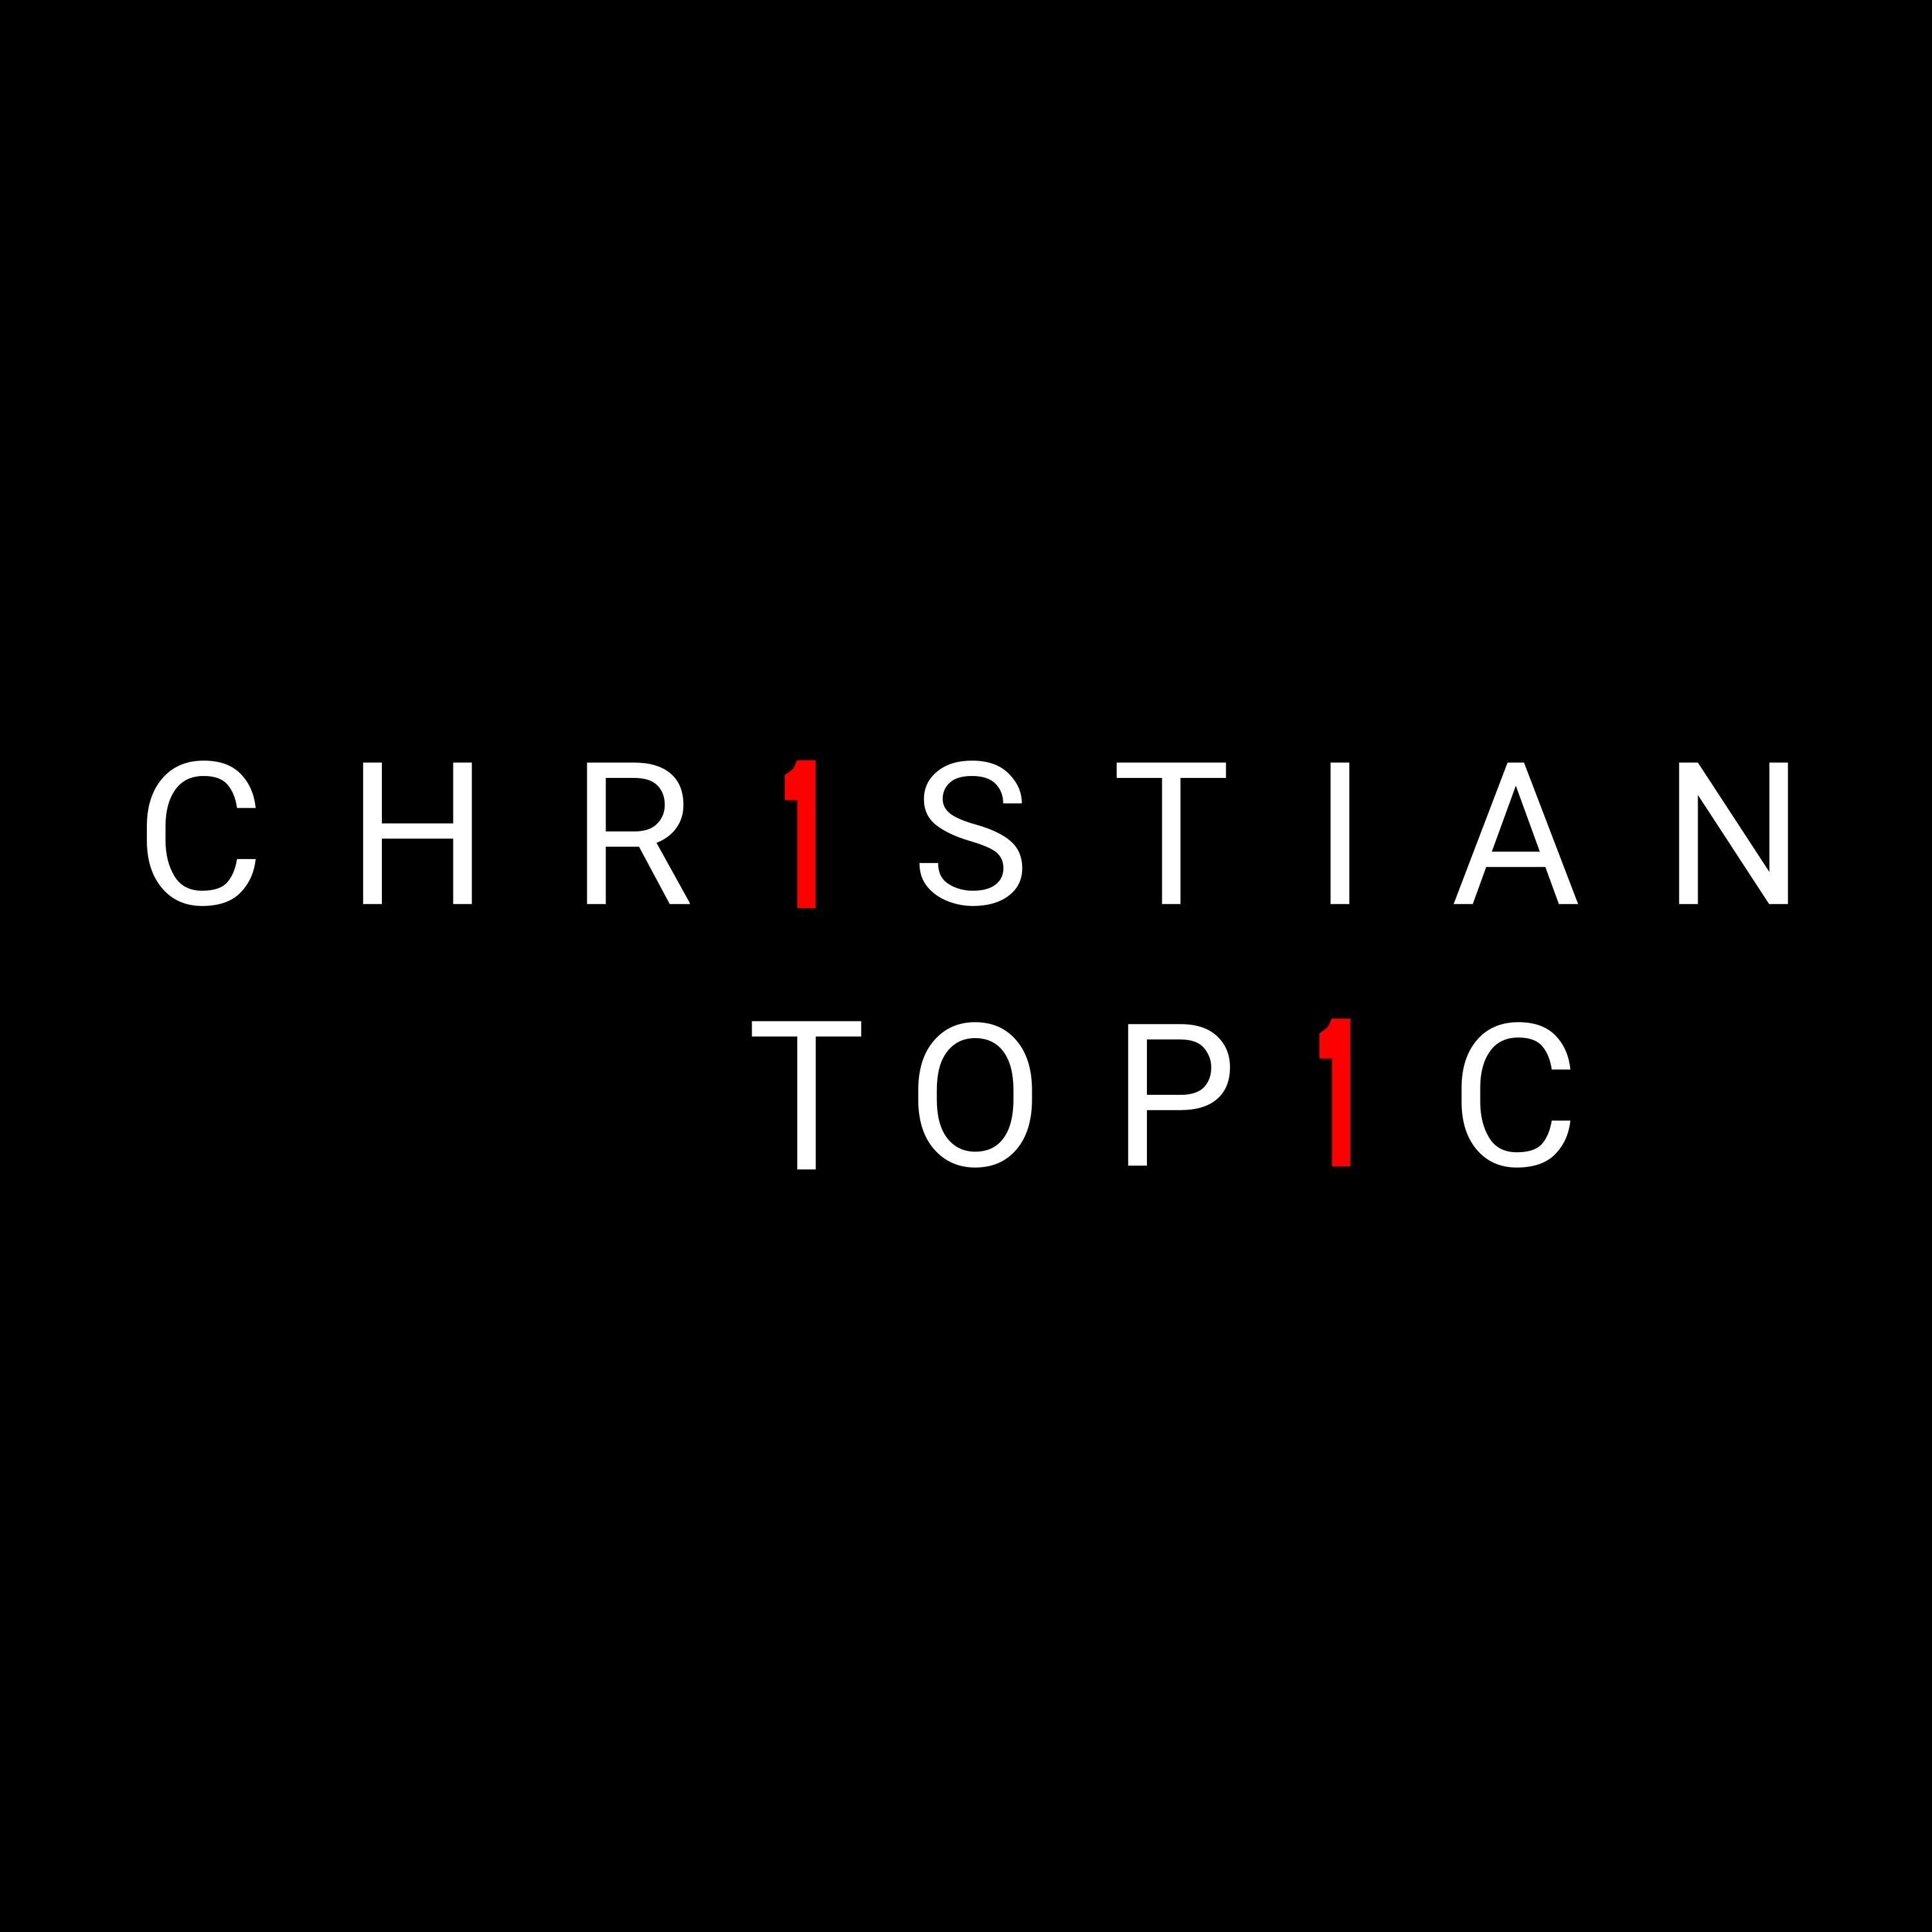 1 Christian 1 Topic